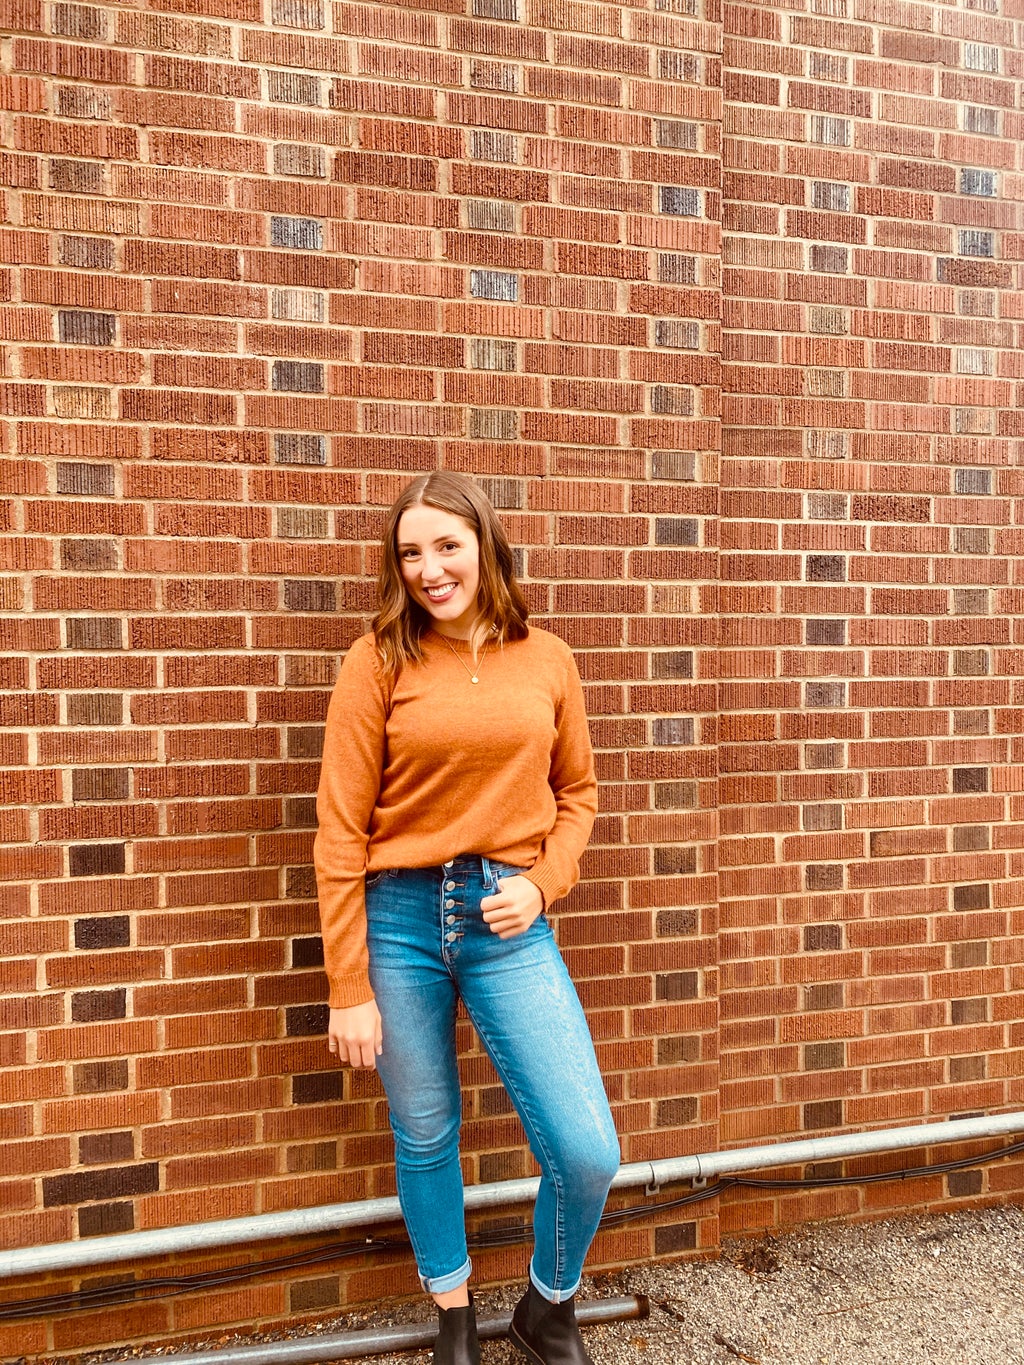 Girl posing against brick wall